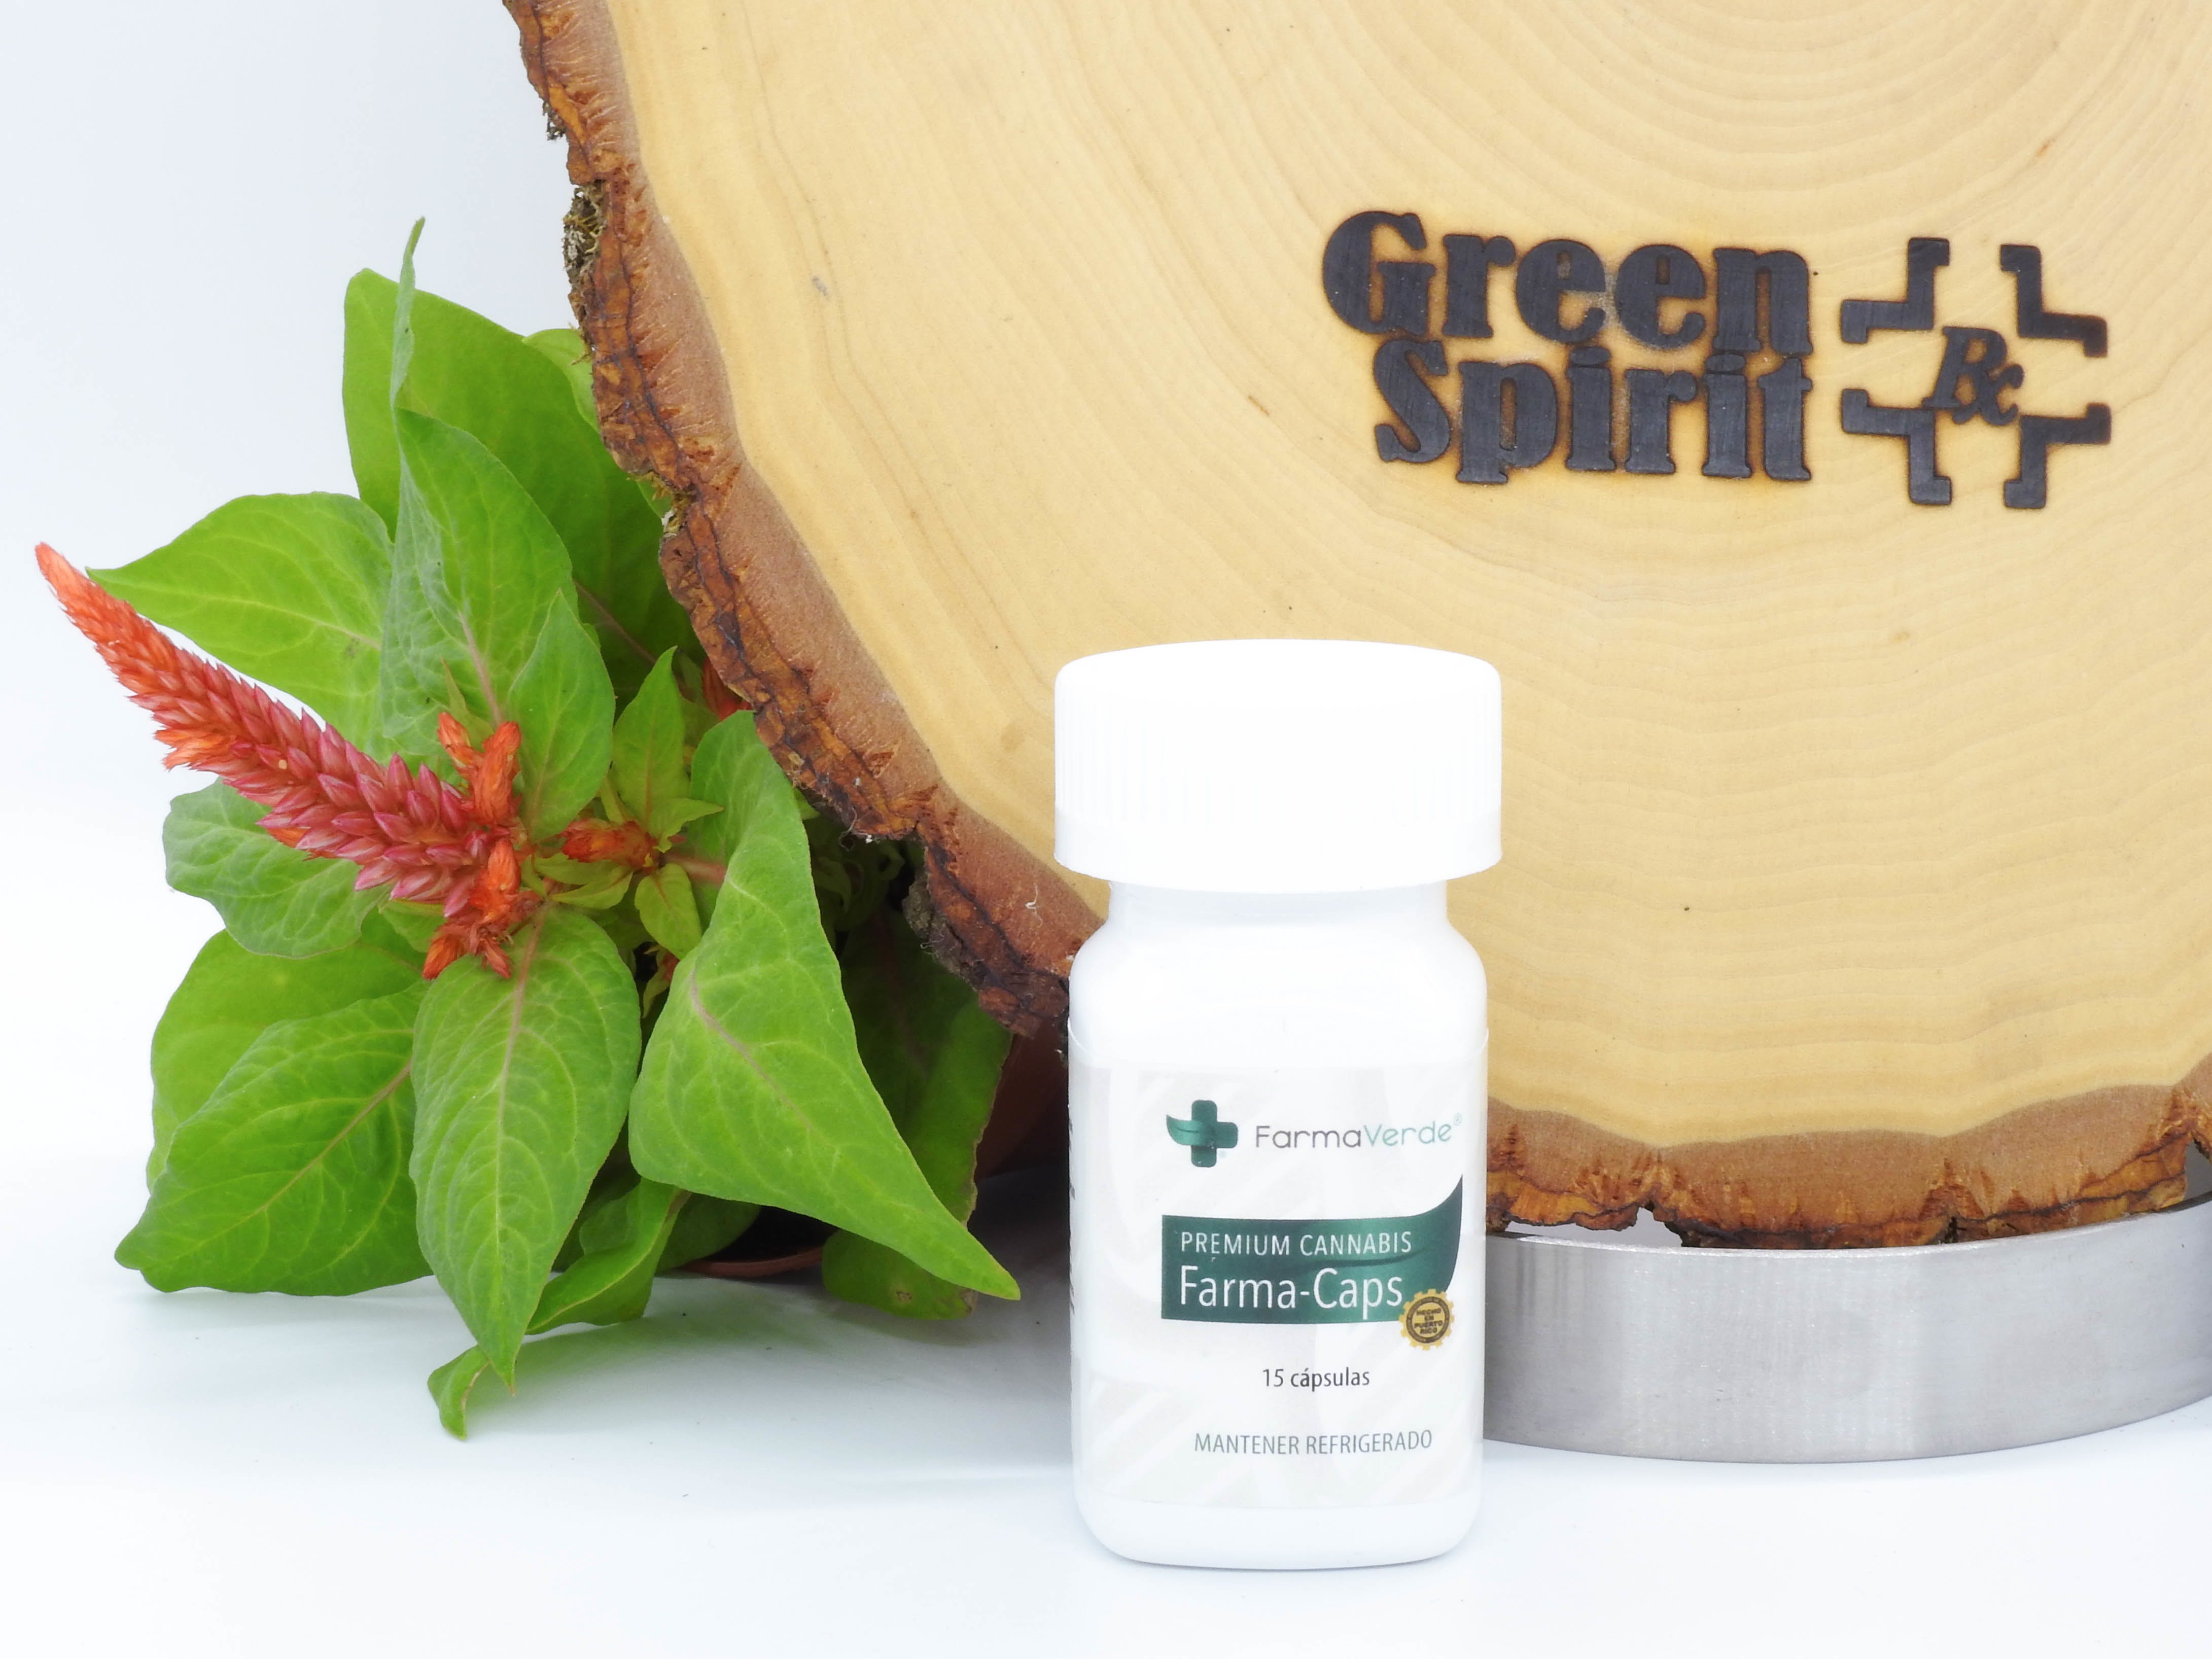 marijuana-dispensaries-green-spirit-rx-in-san-juan-canna-capsules-farma-verde